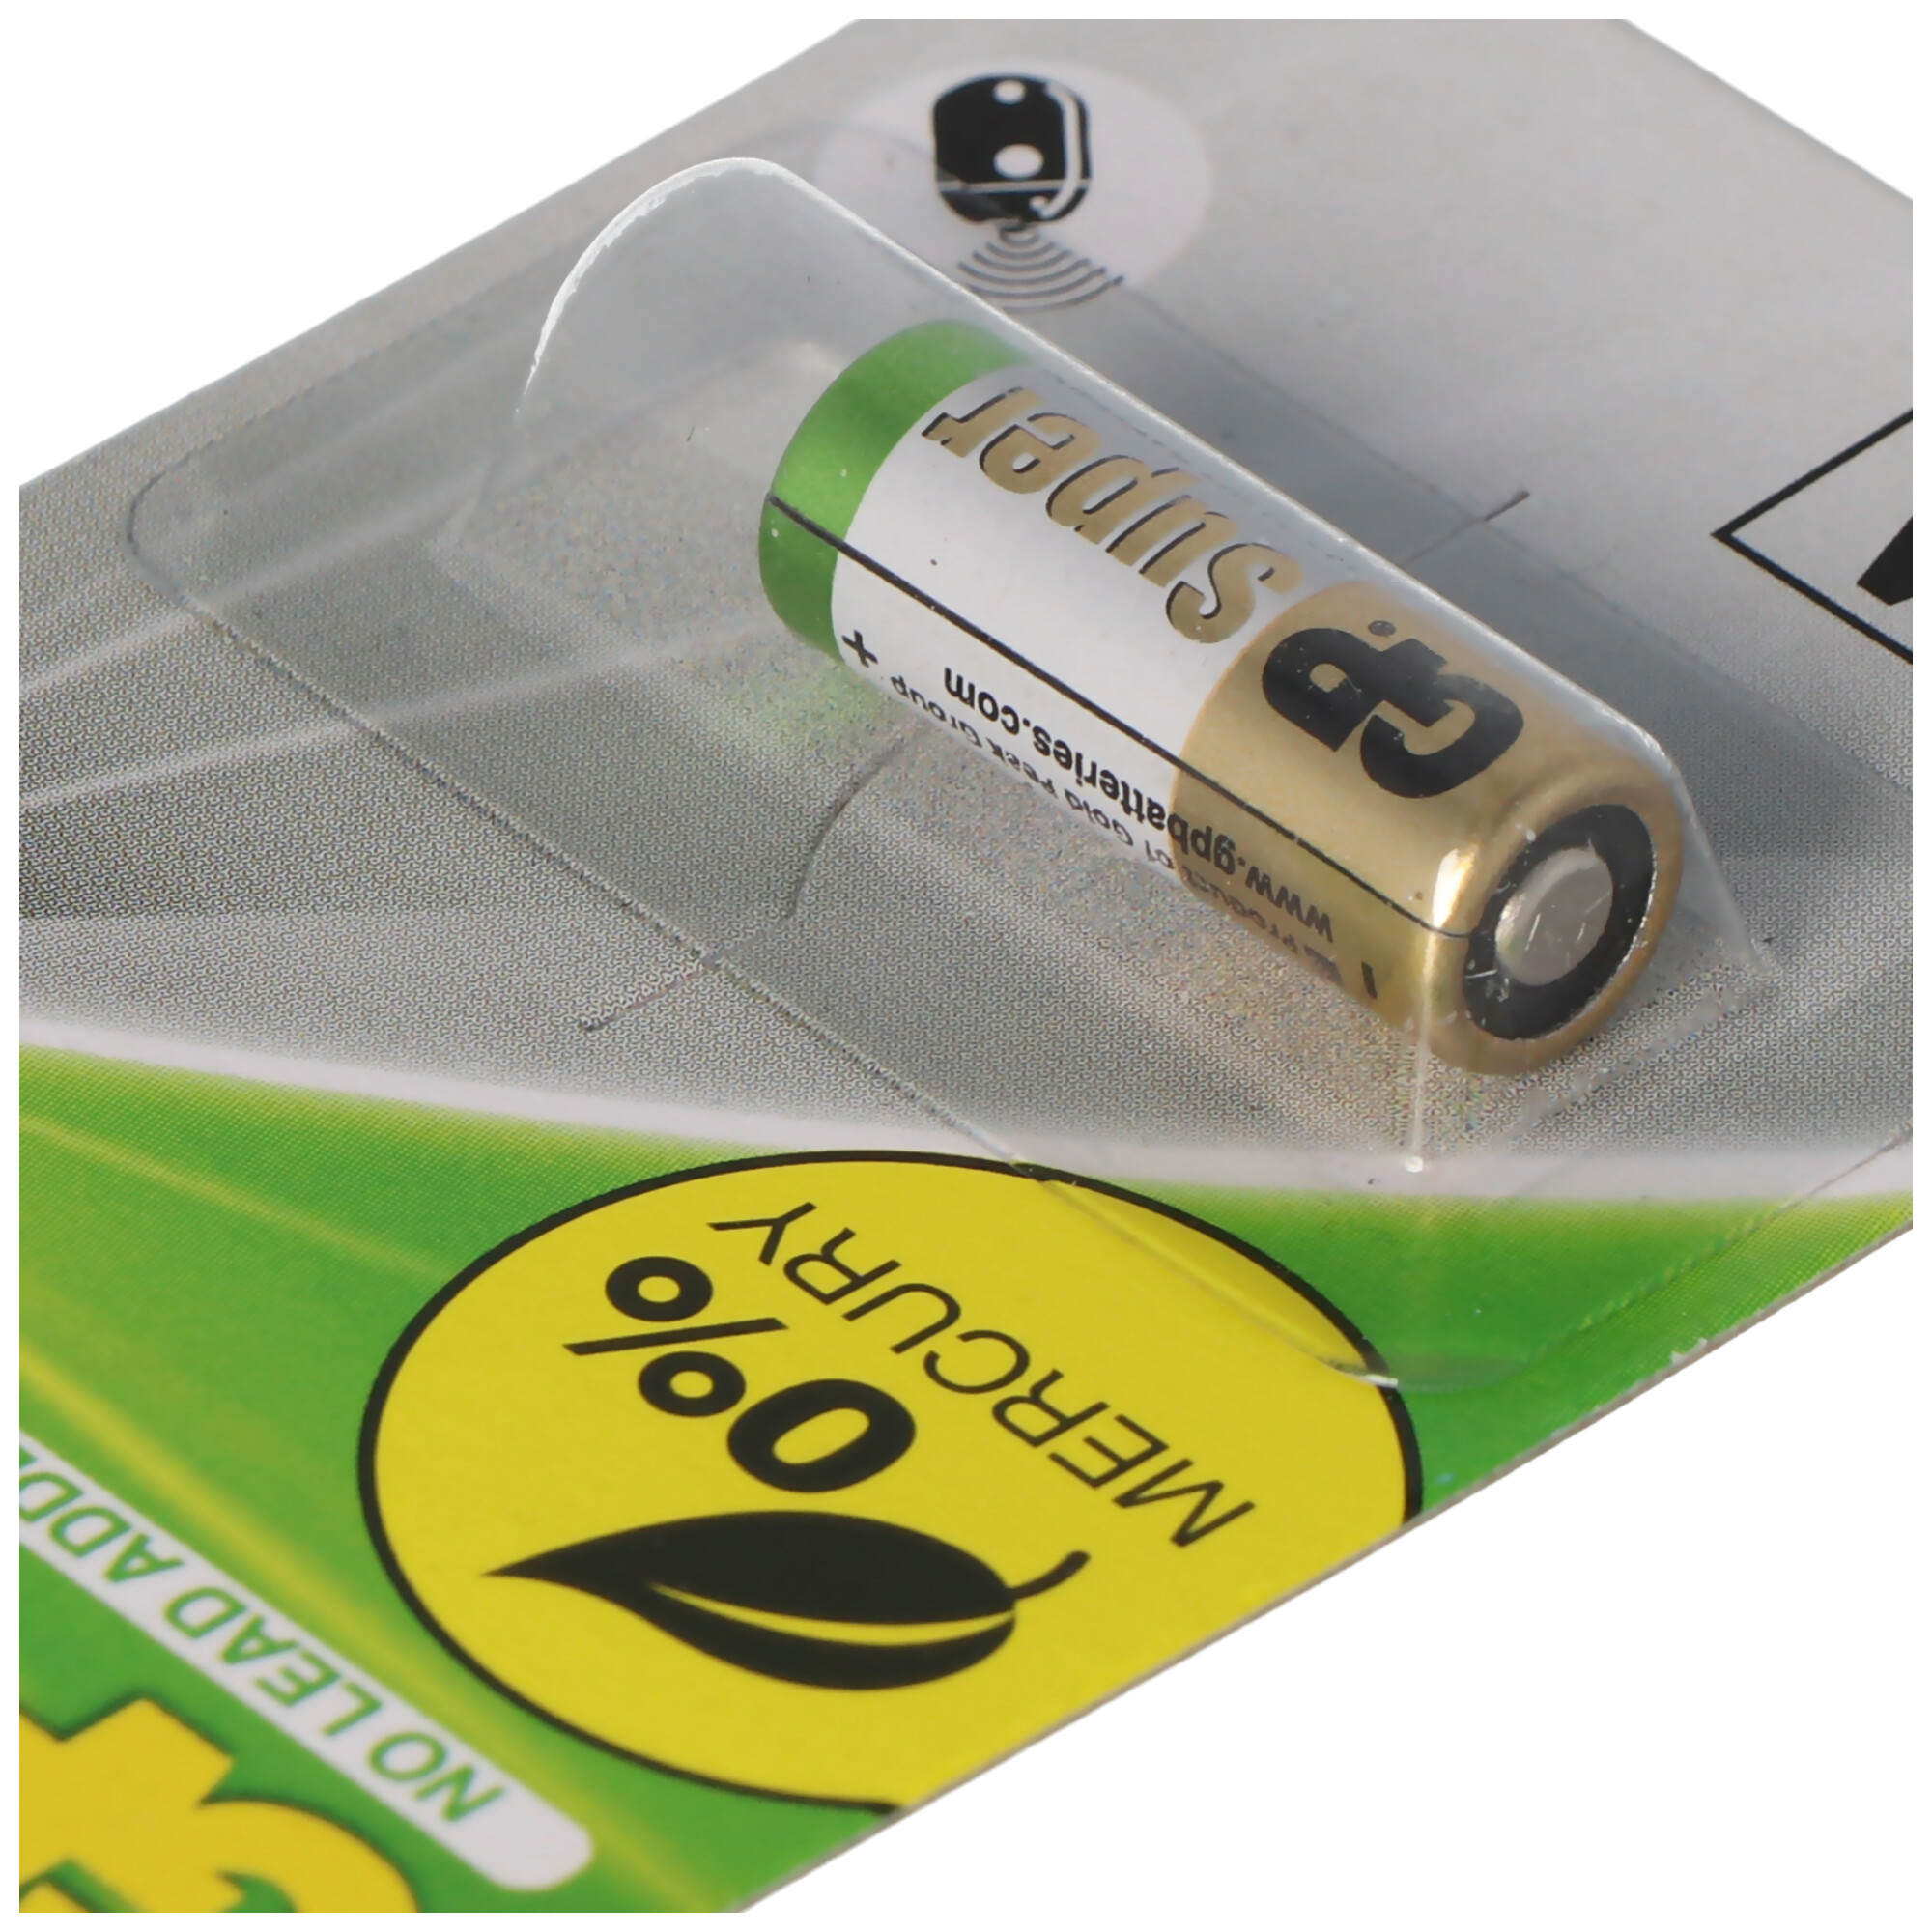 GP29A Alkaline 9 Volt Batterie, A29, 25A, C5, L822, EL822, EL-822 für Fernbedienungen, Kameras, etc.